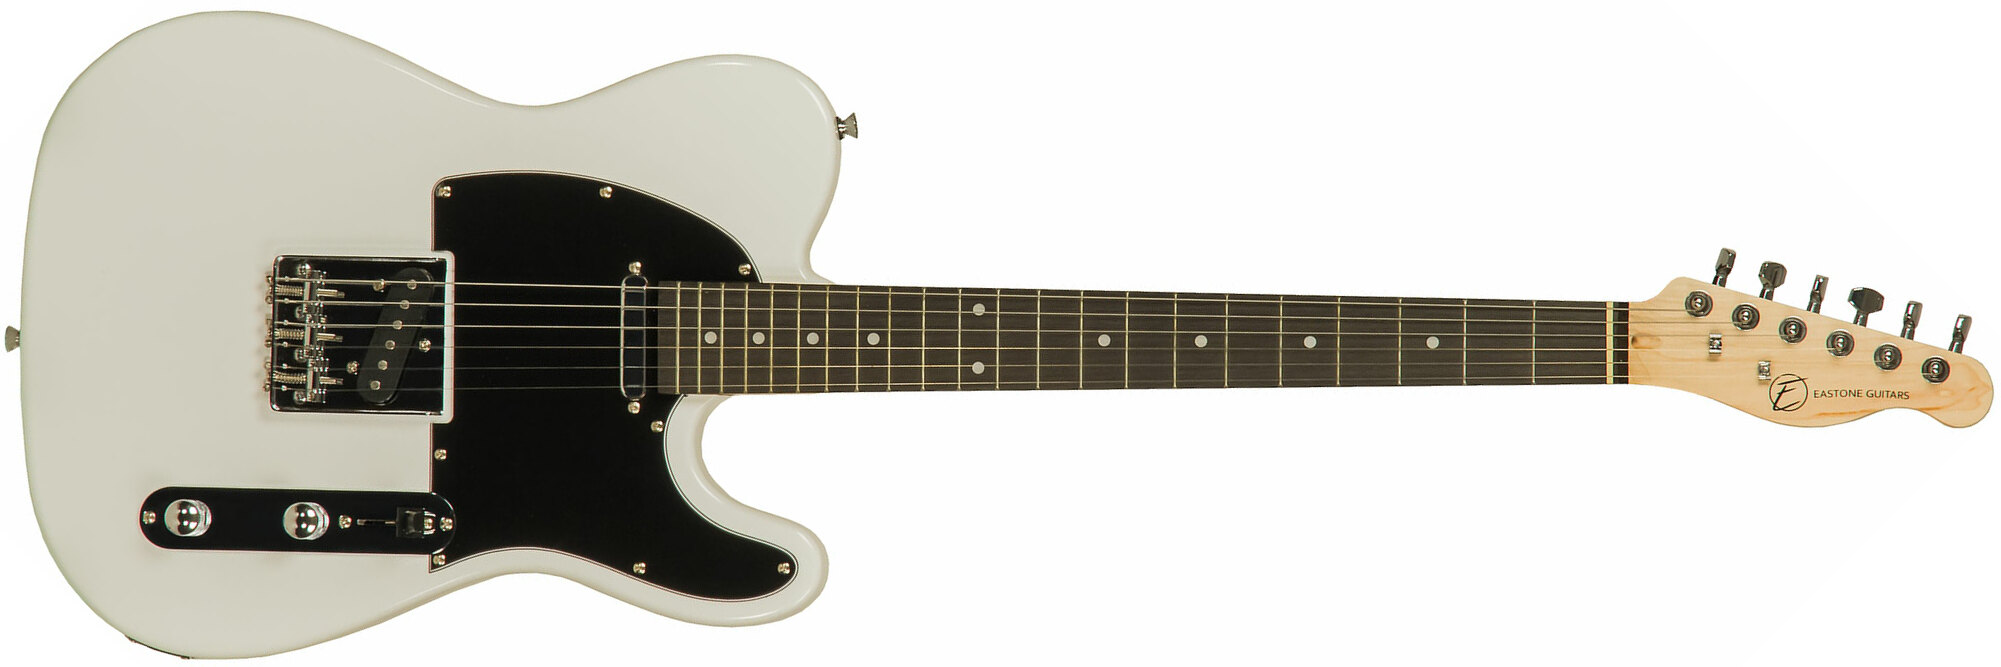 Eastone Tl70 2s Ht Pur - Olympic White - Guitare Électrique Forme Tel - Main picture